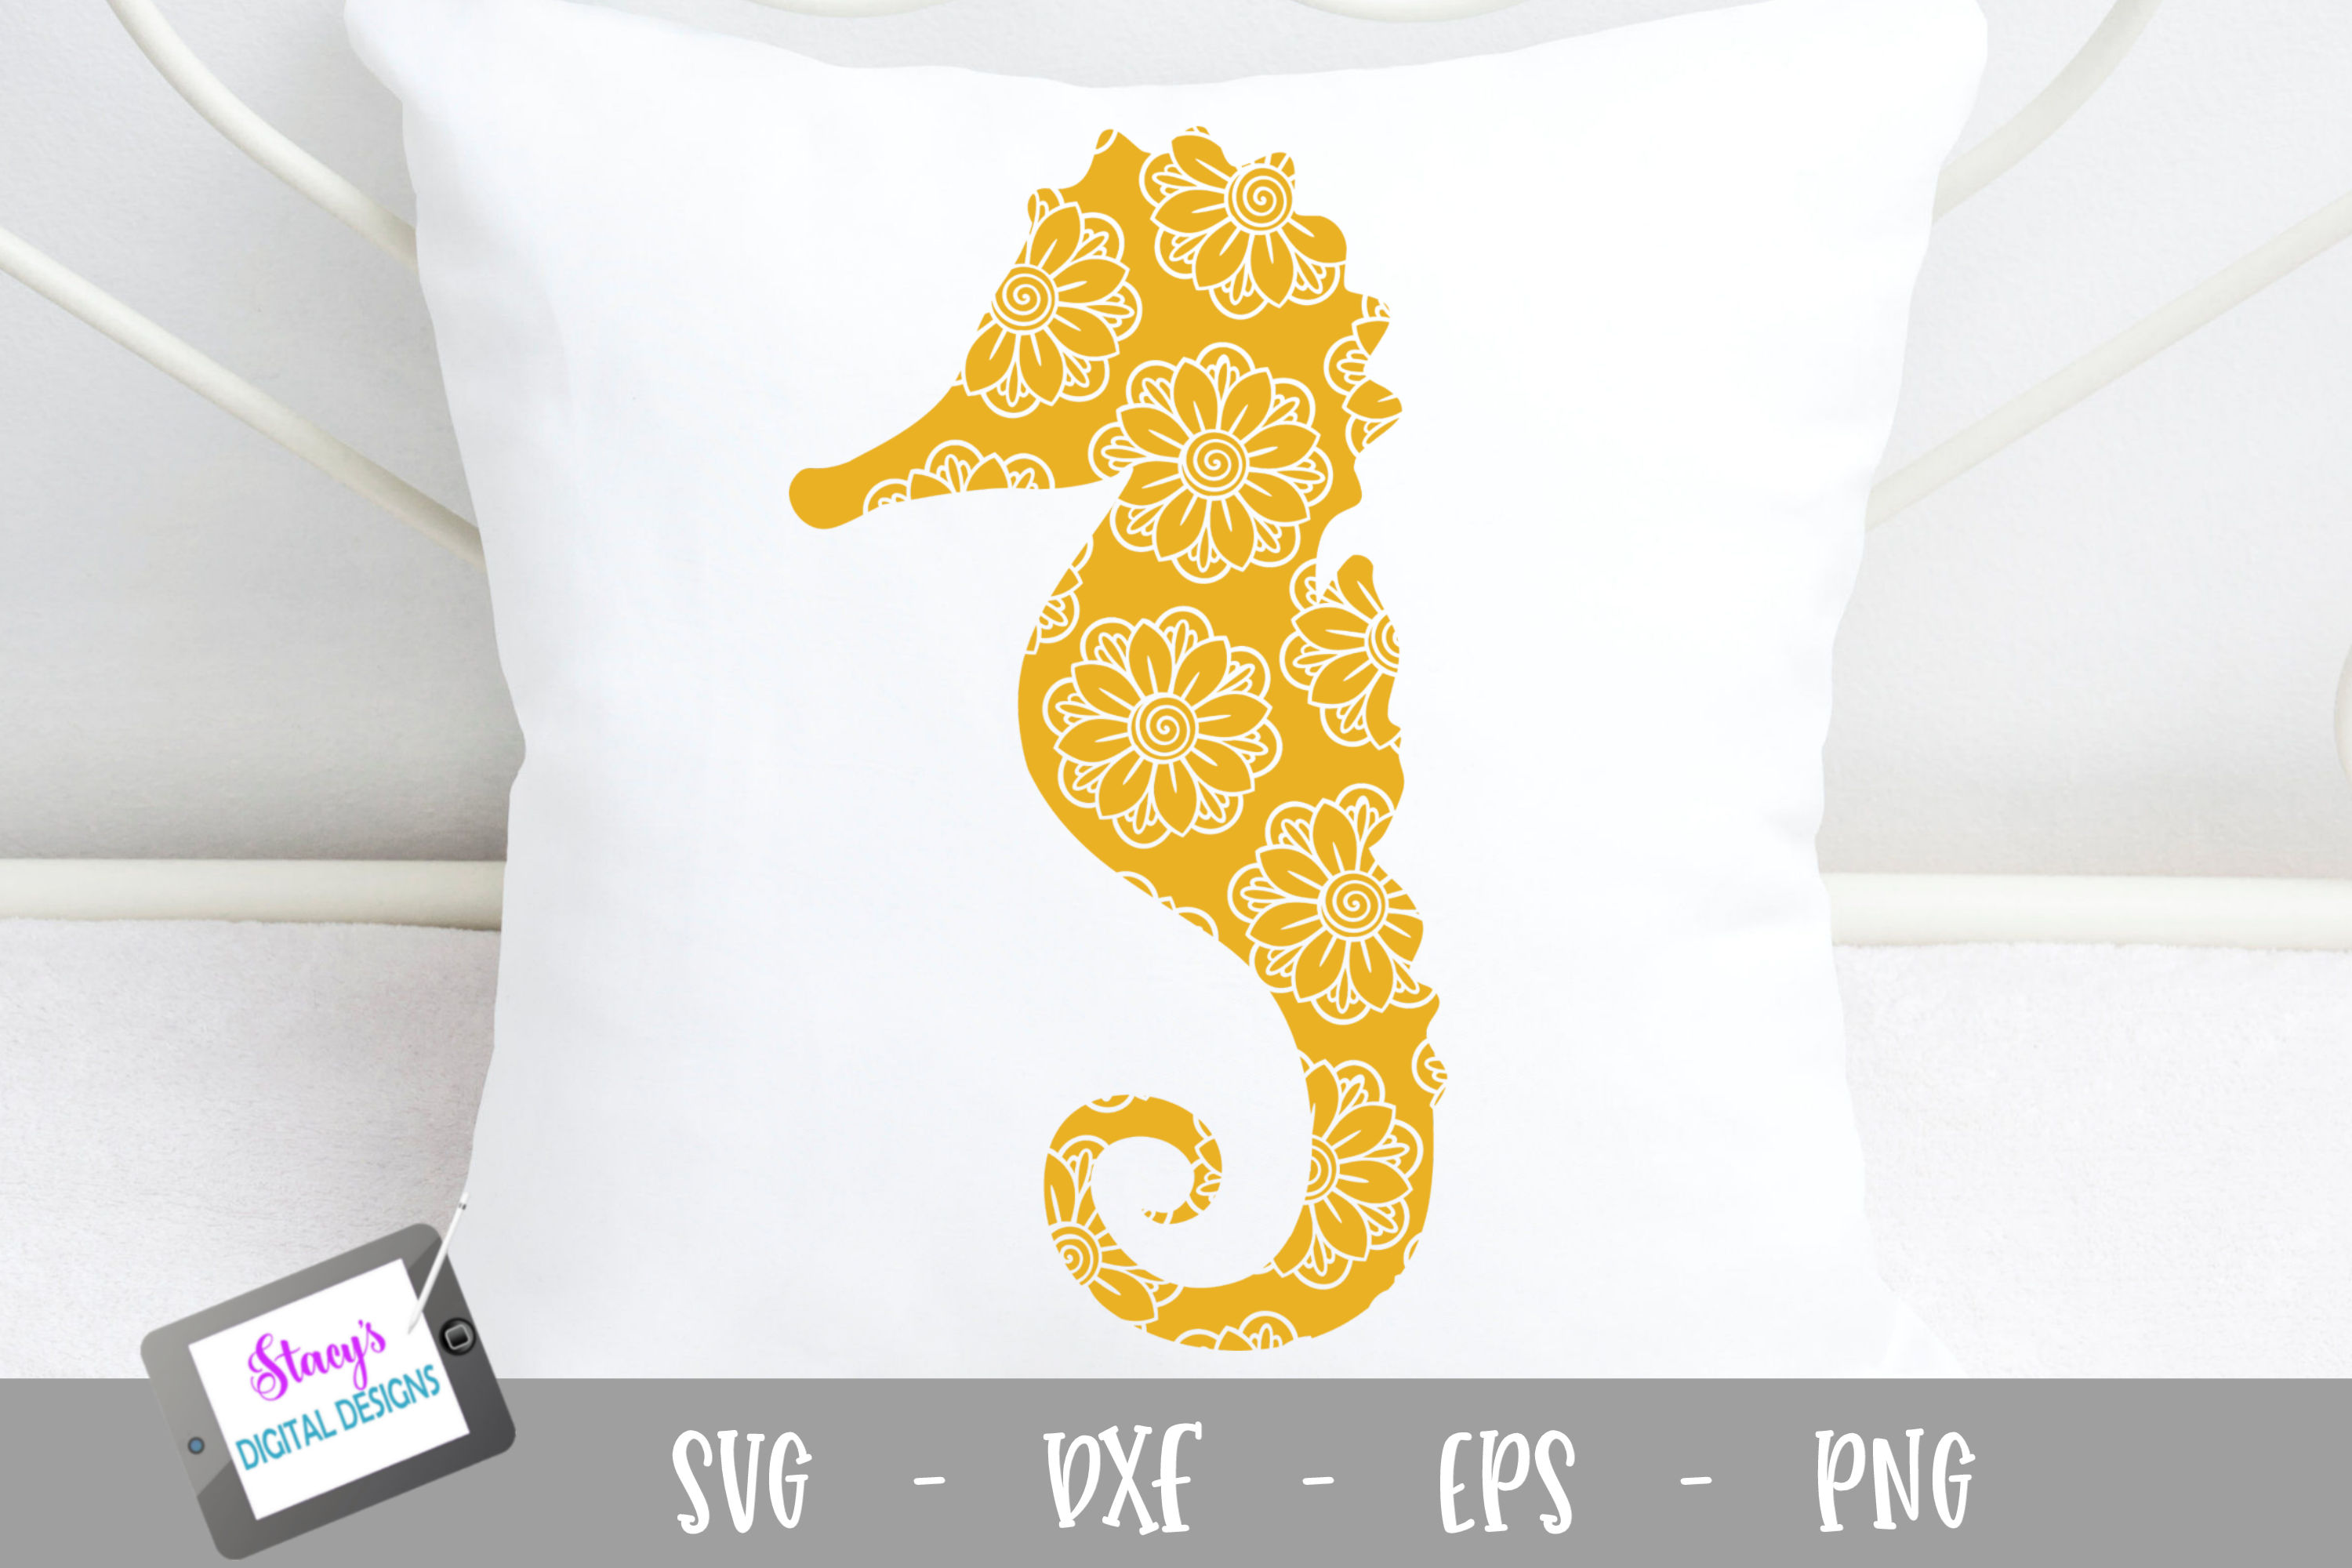 Seahorse SVG - Seahorse with floral mandala pattern